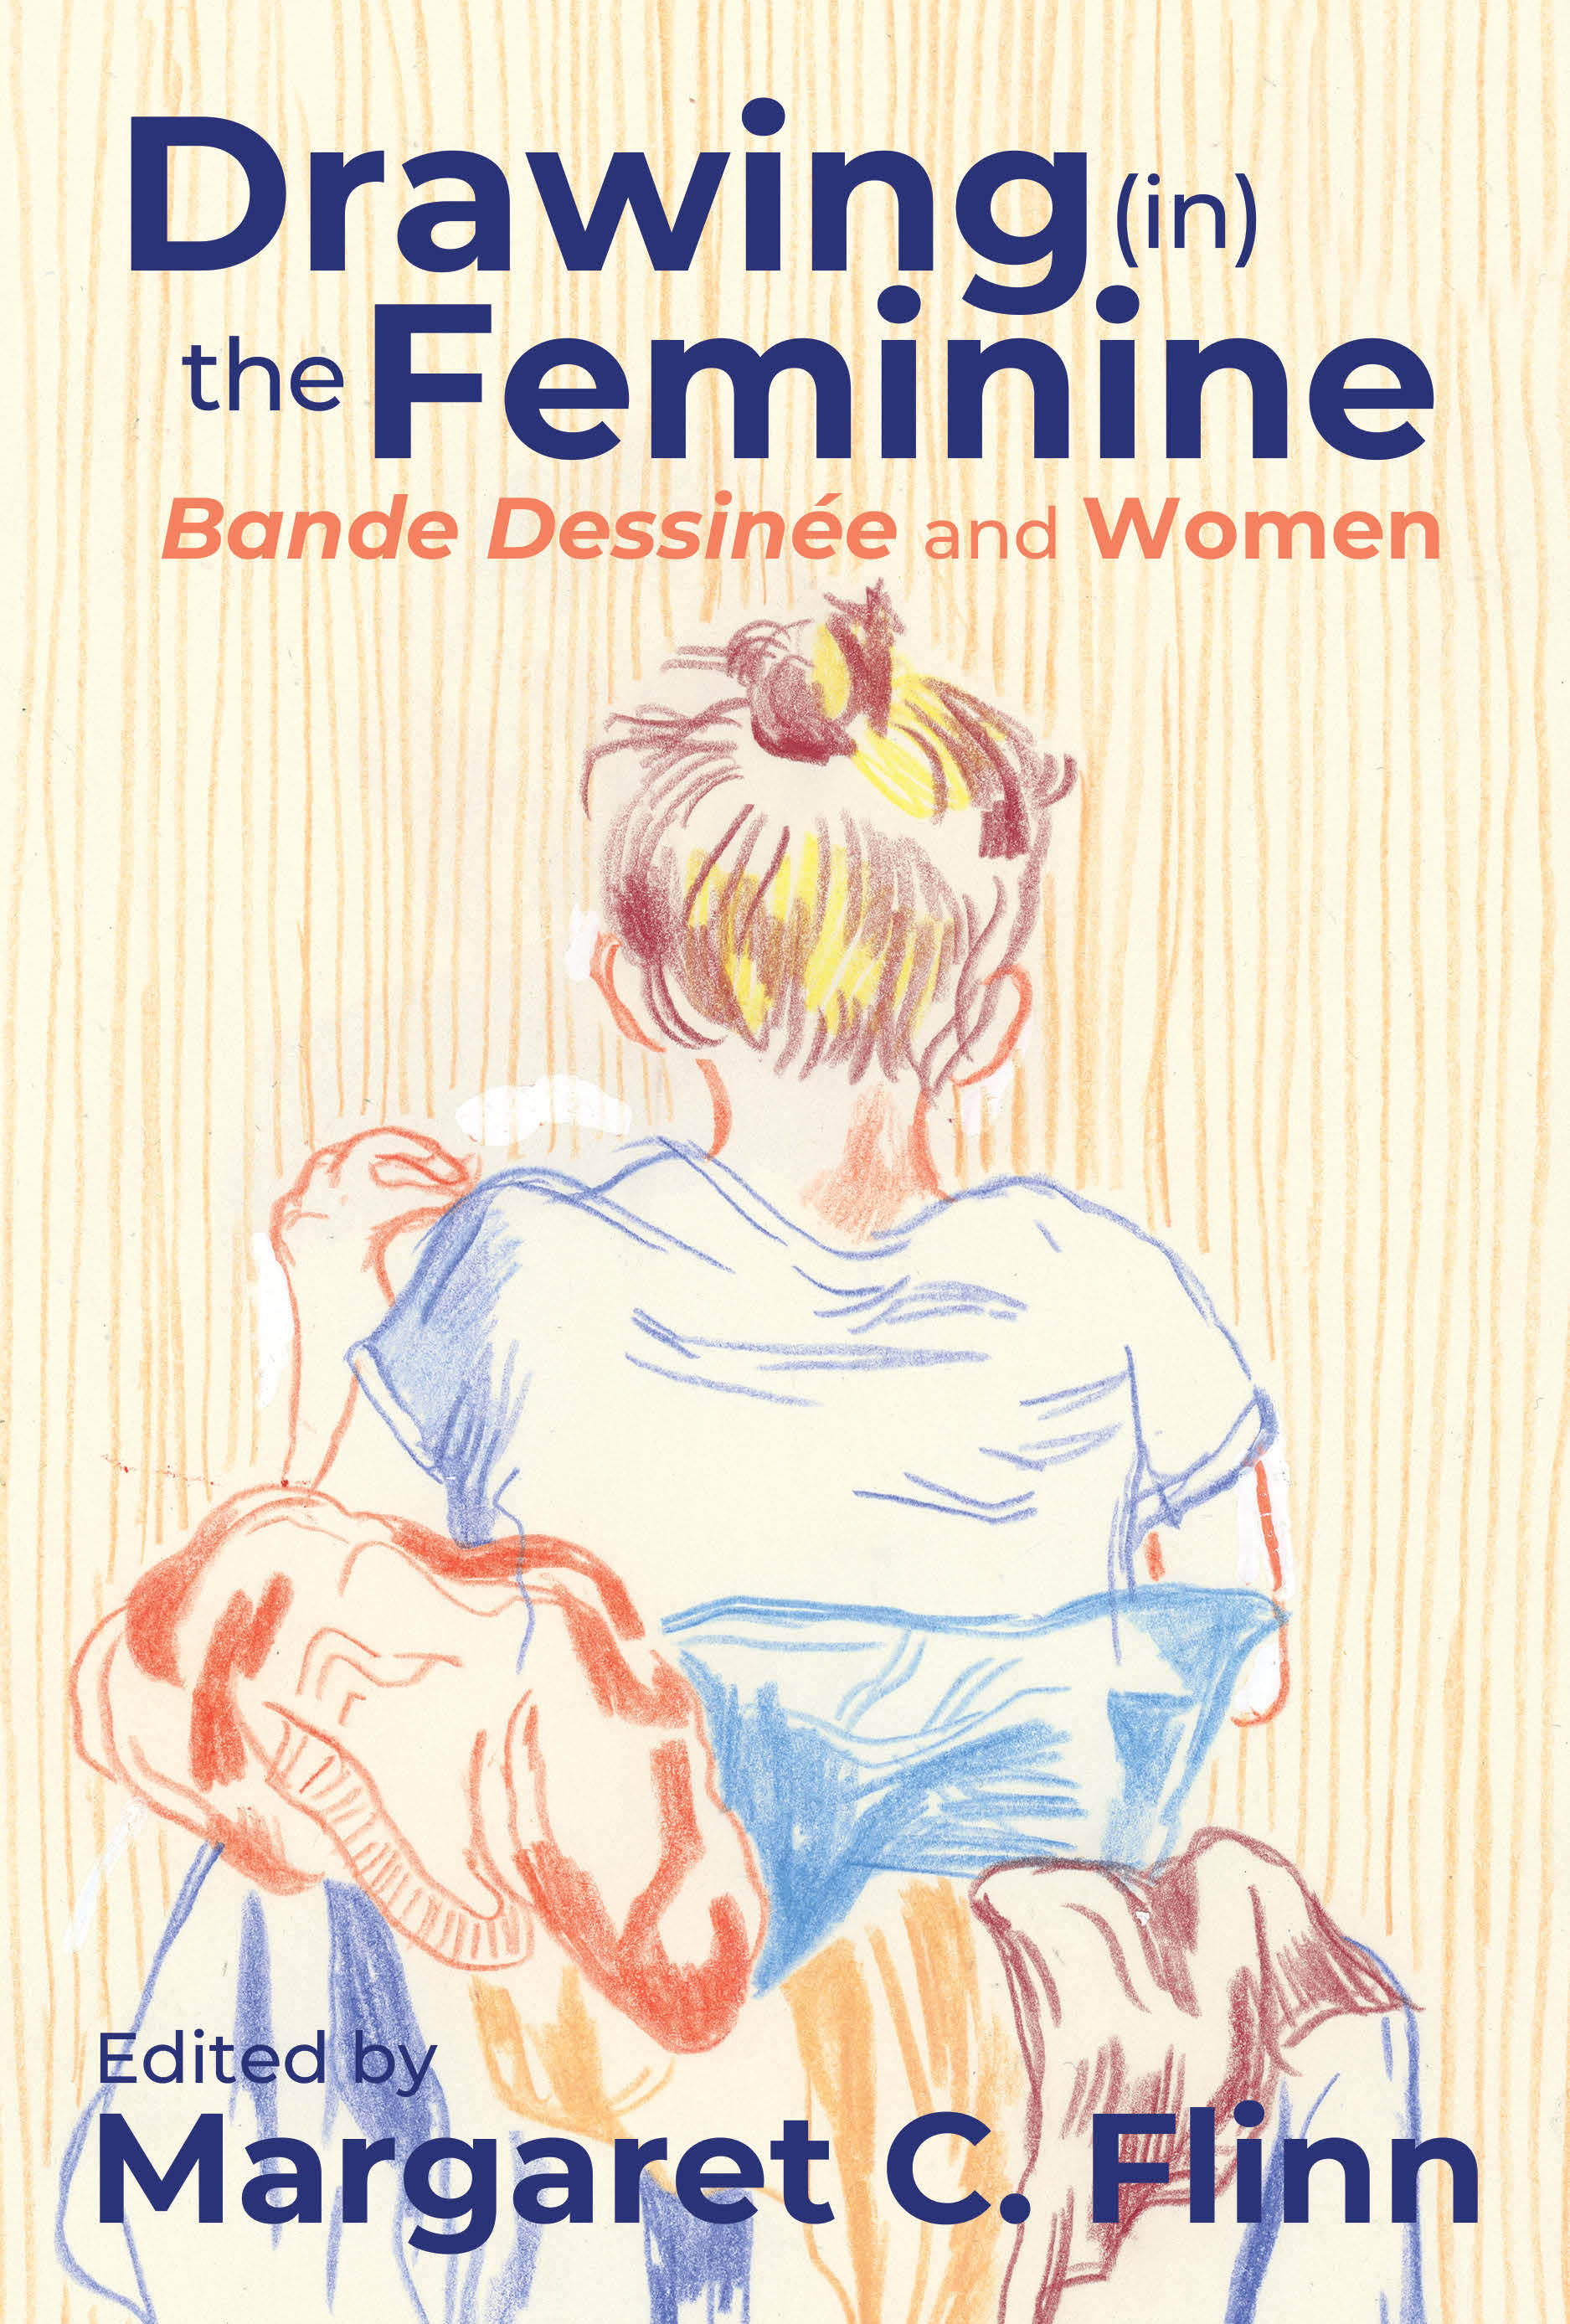 Drawing (in) the Feminine